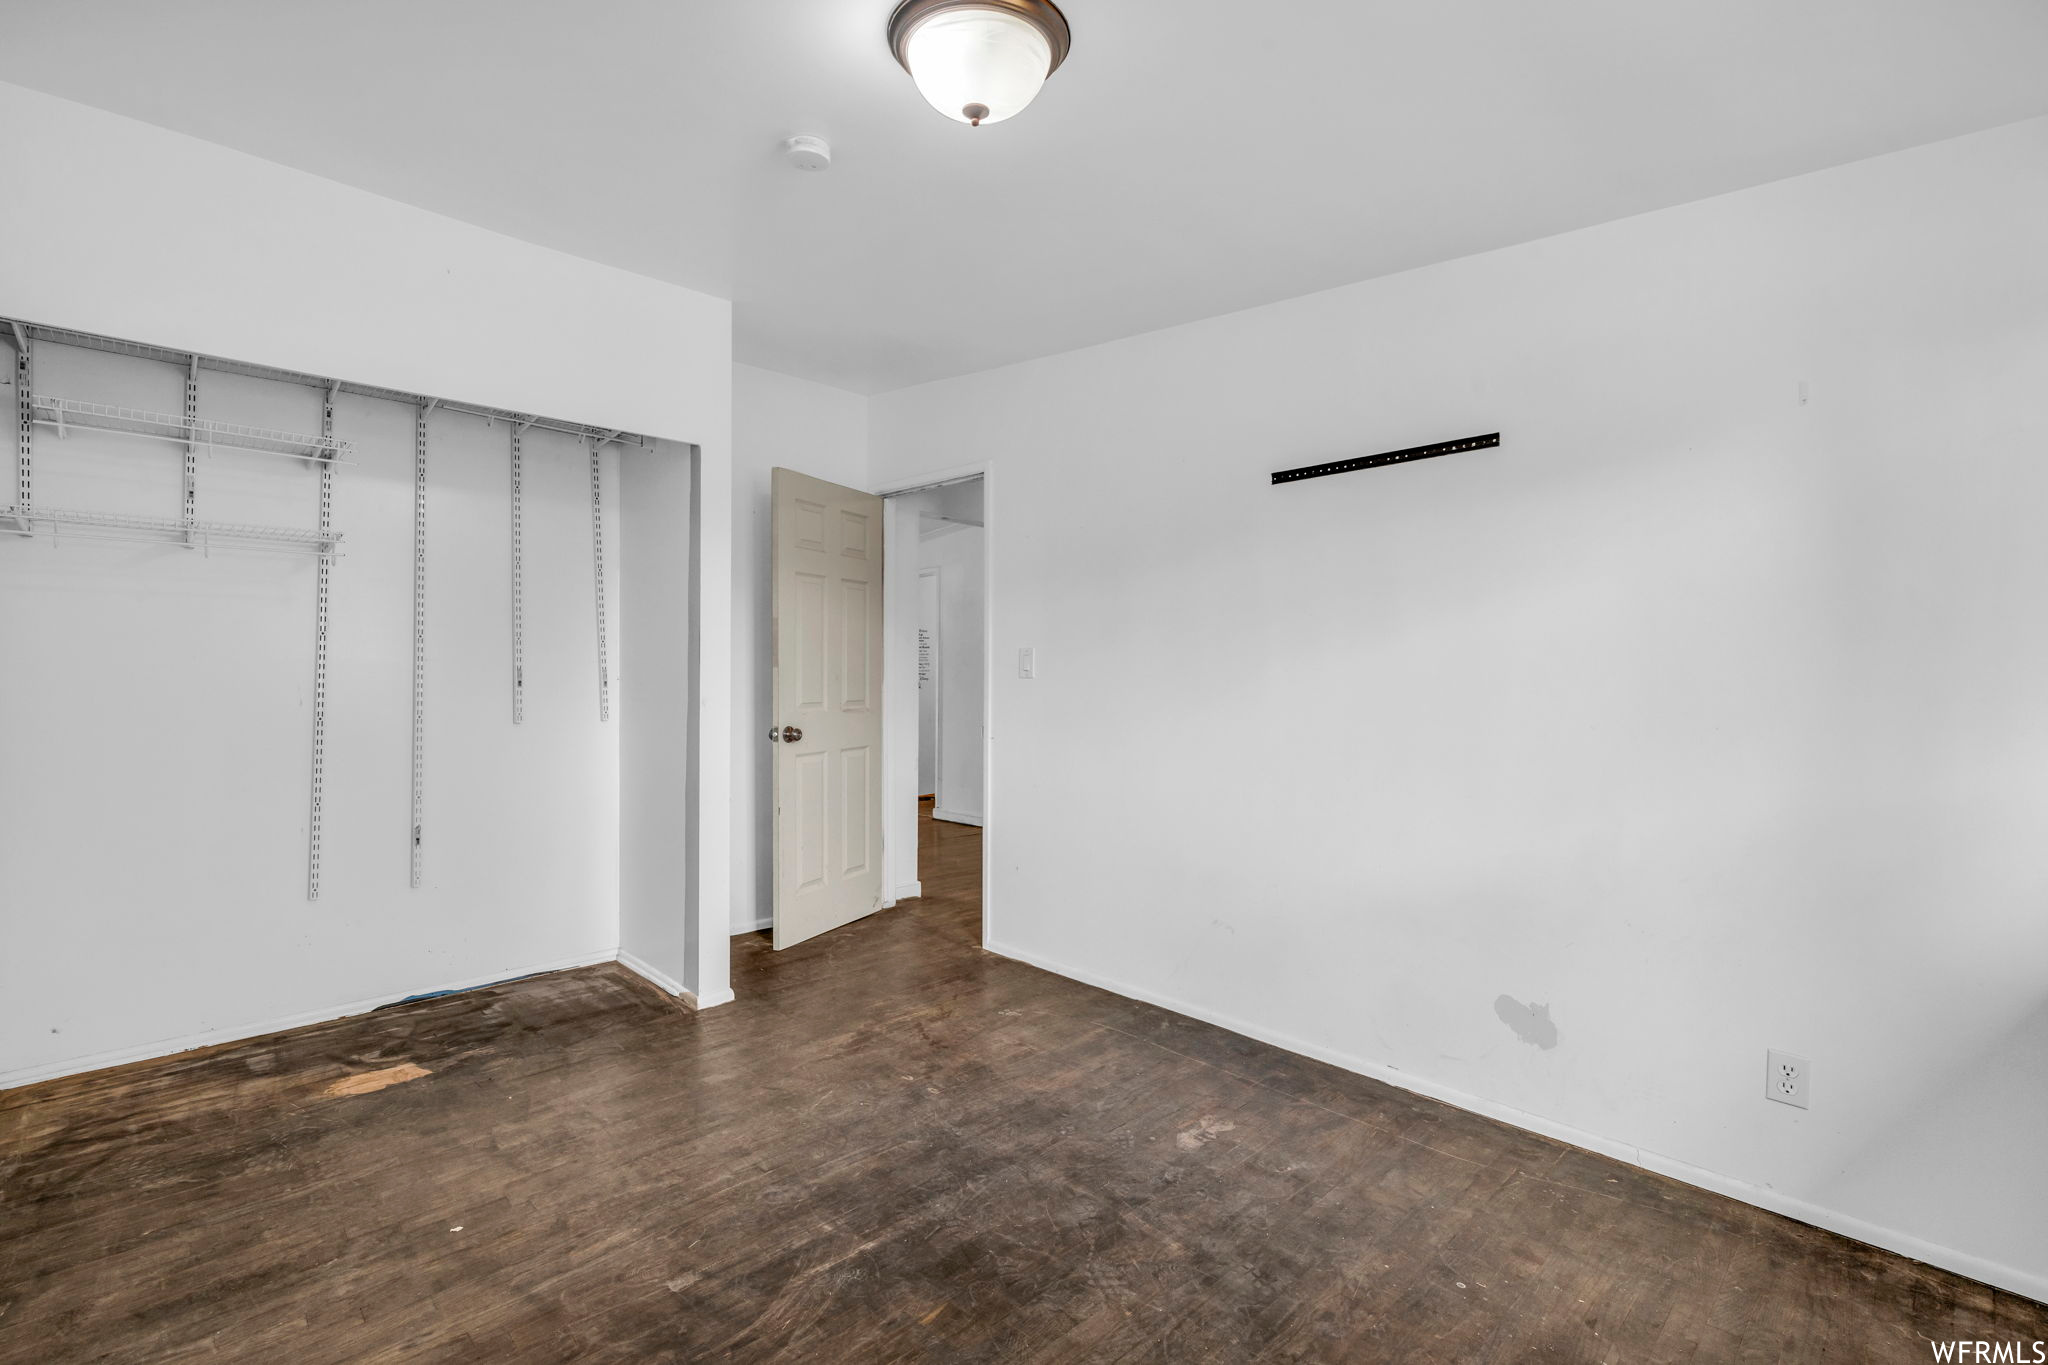 Empty room with dark wood-type flooring